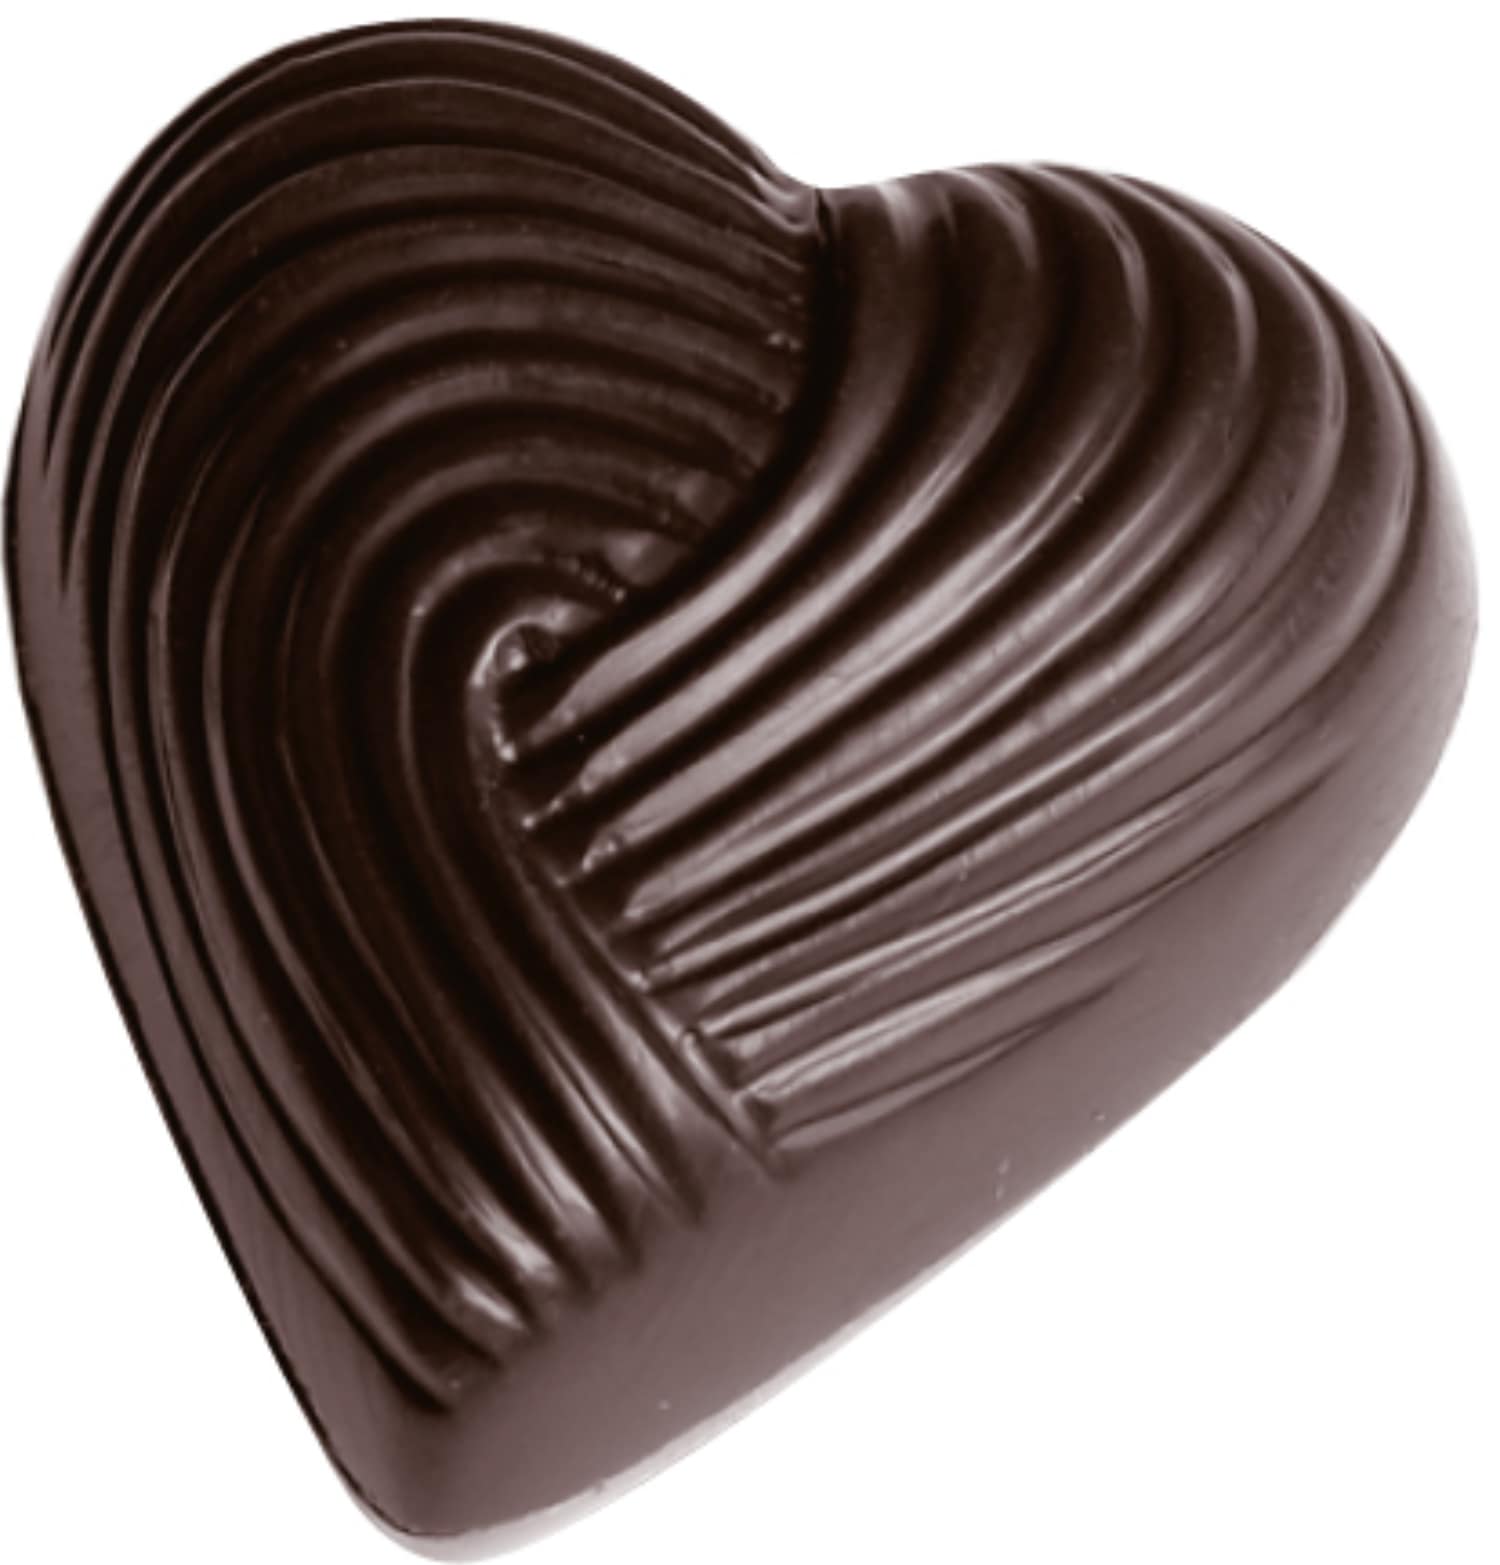 Schokoladenform "Herz" 421513